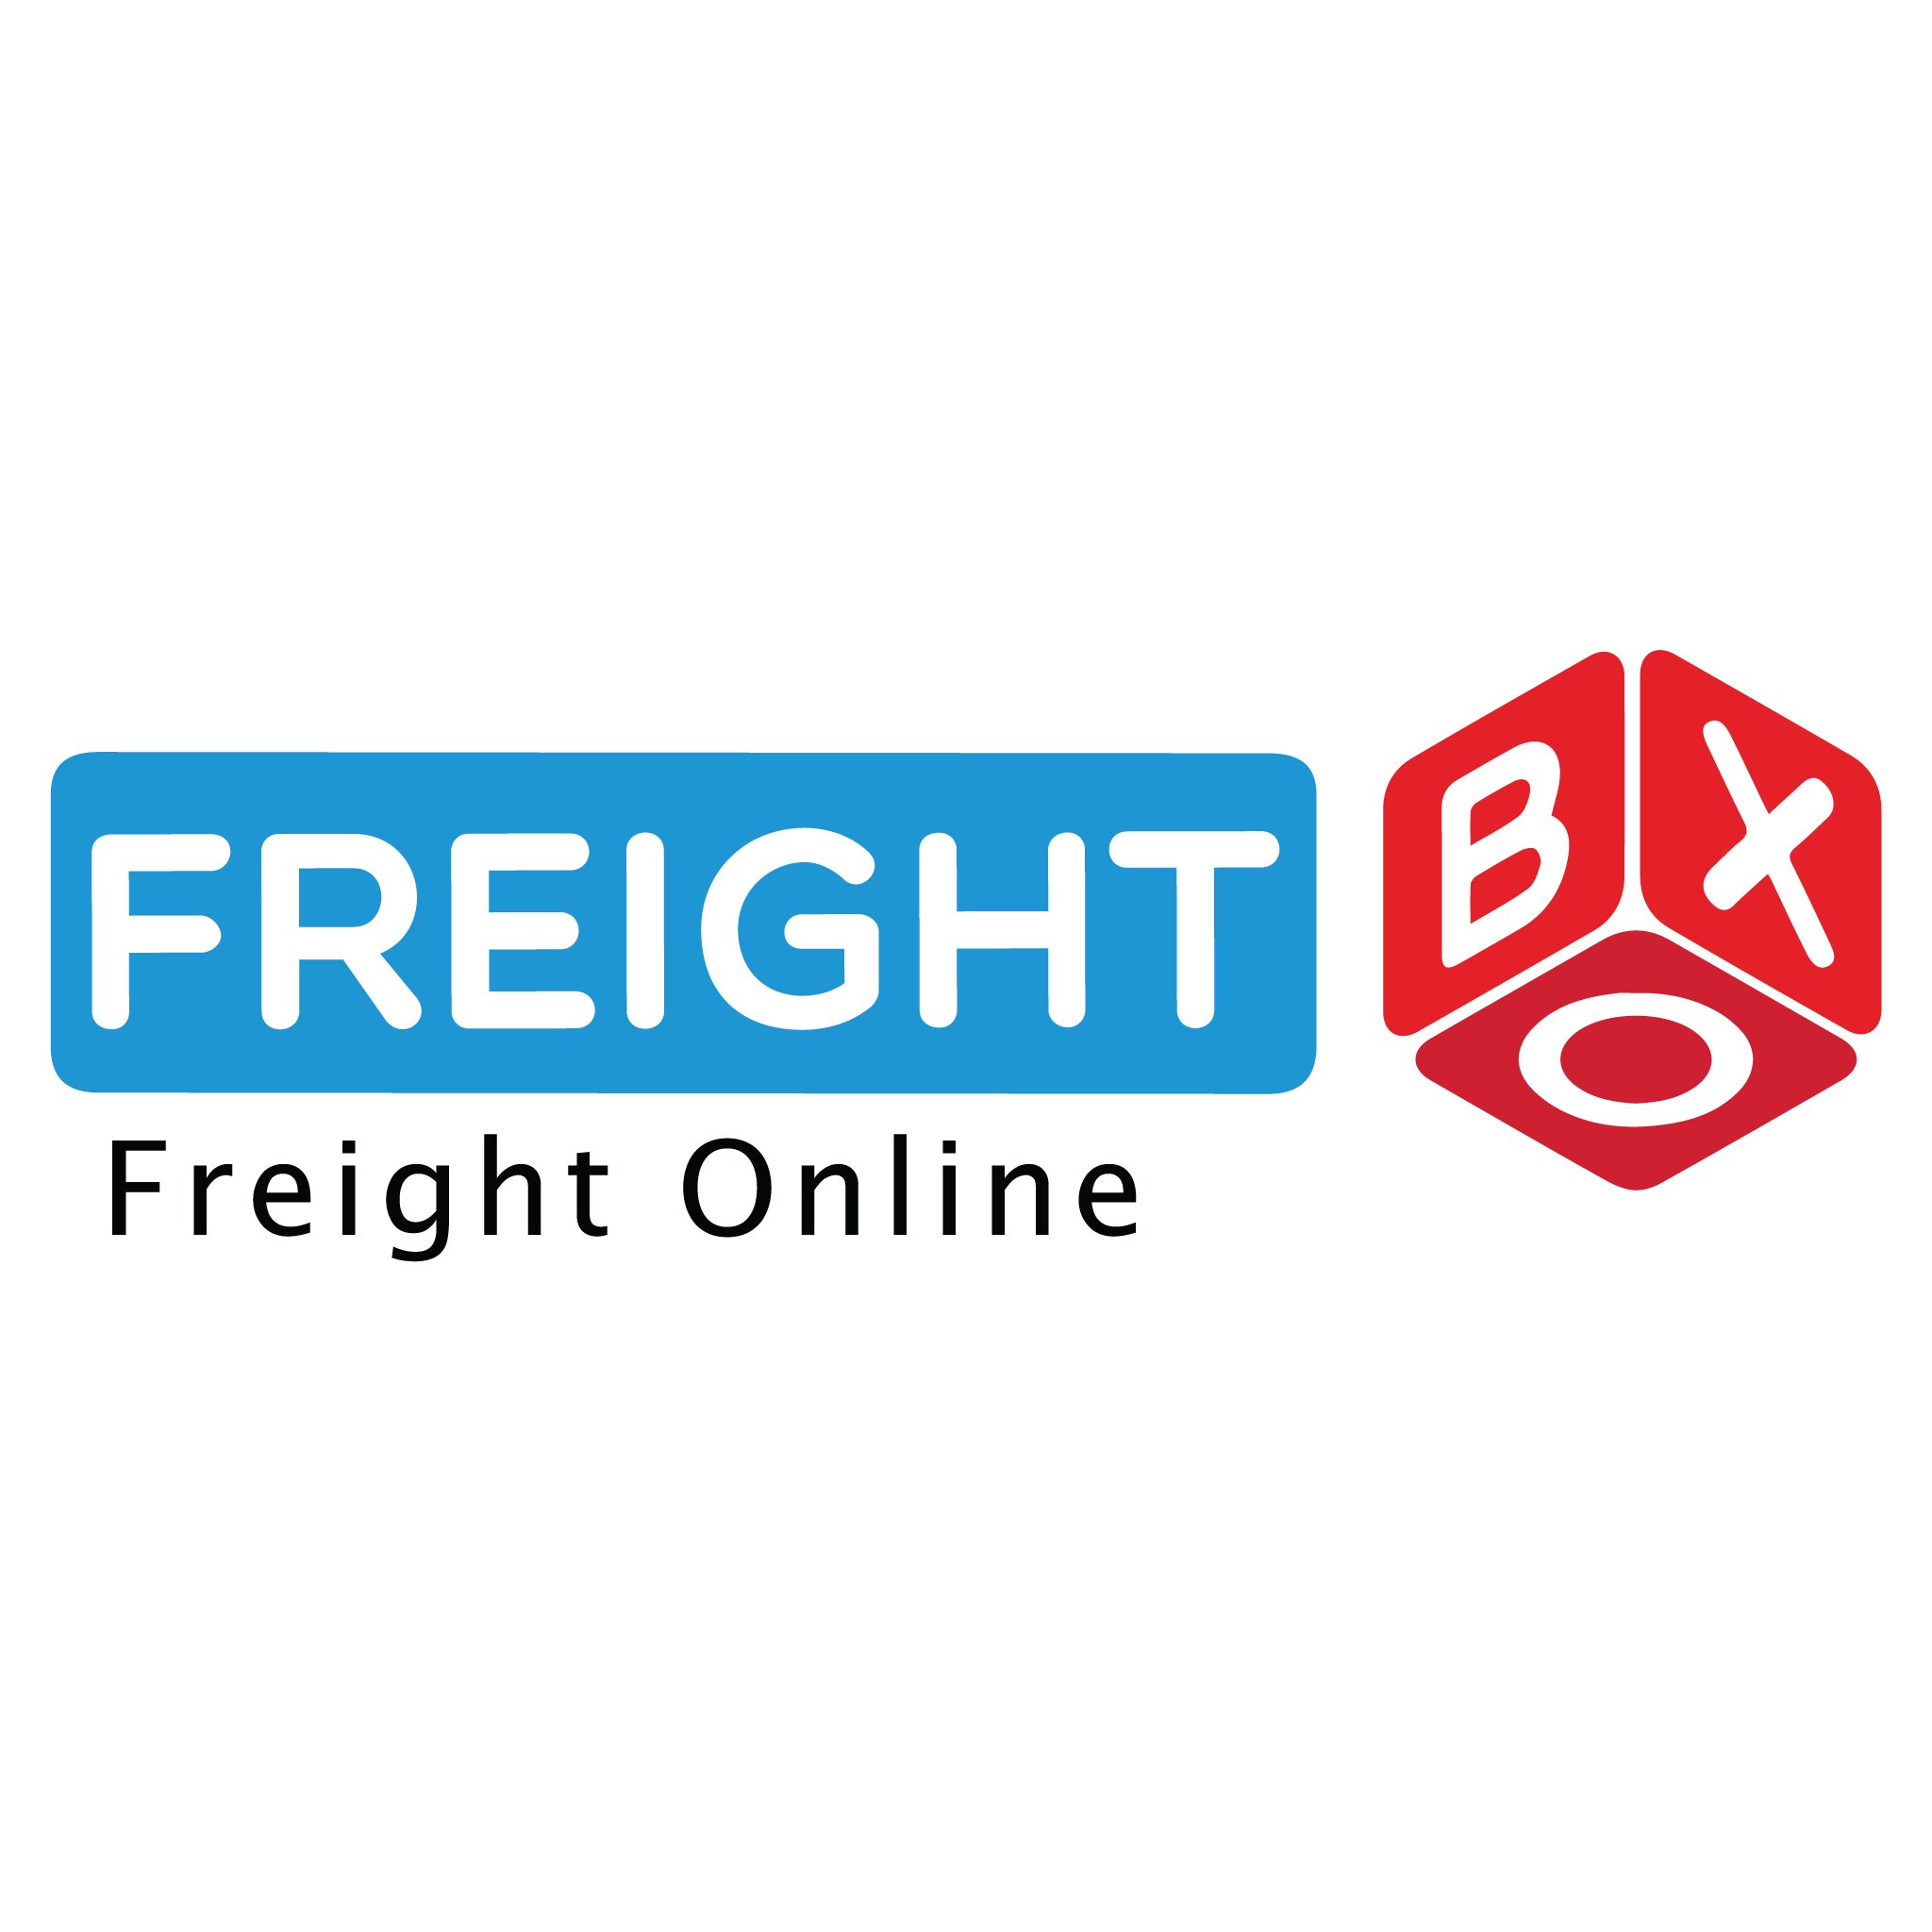 Freight Box